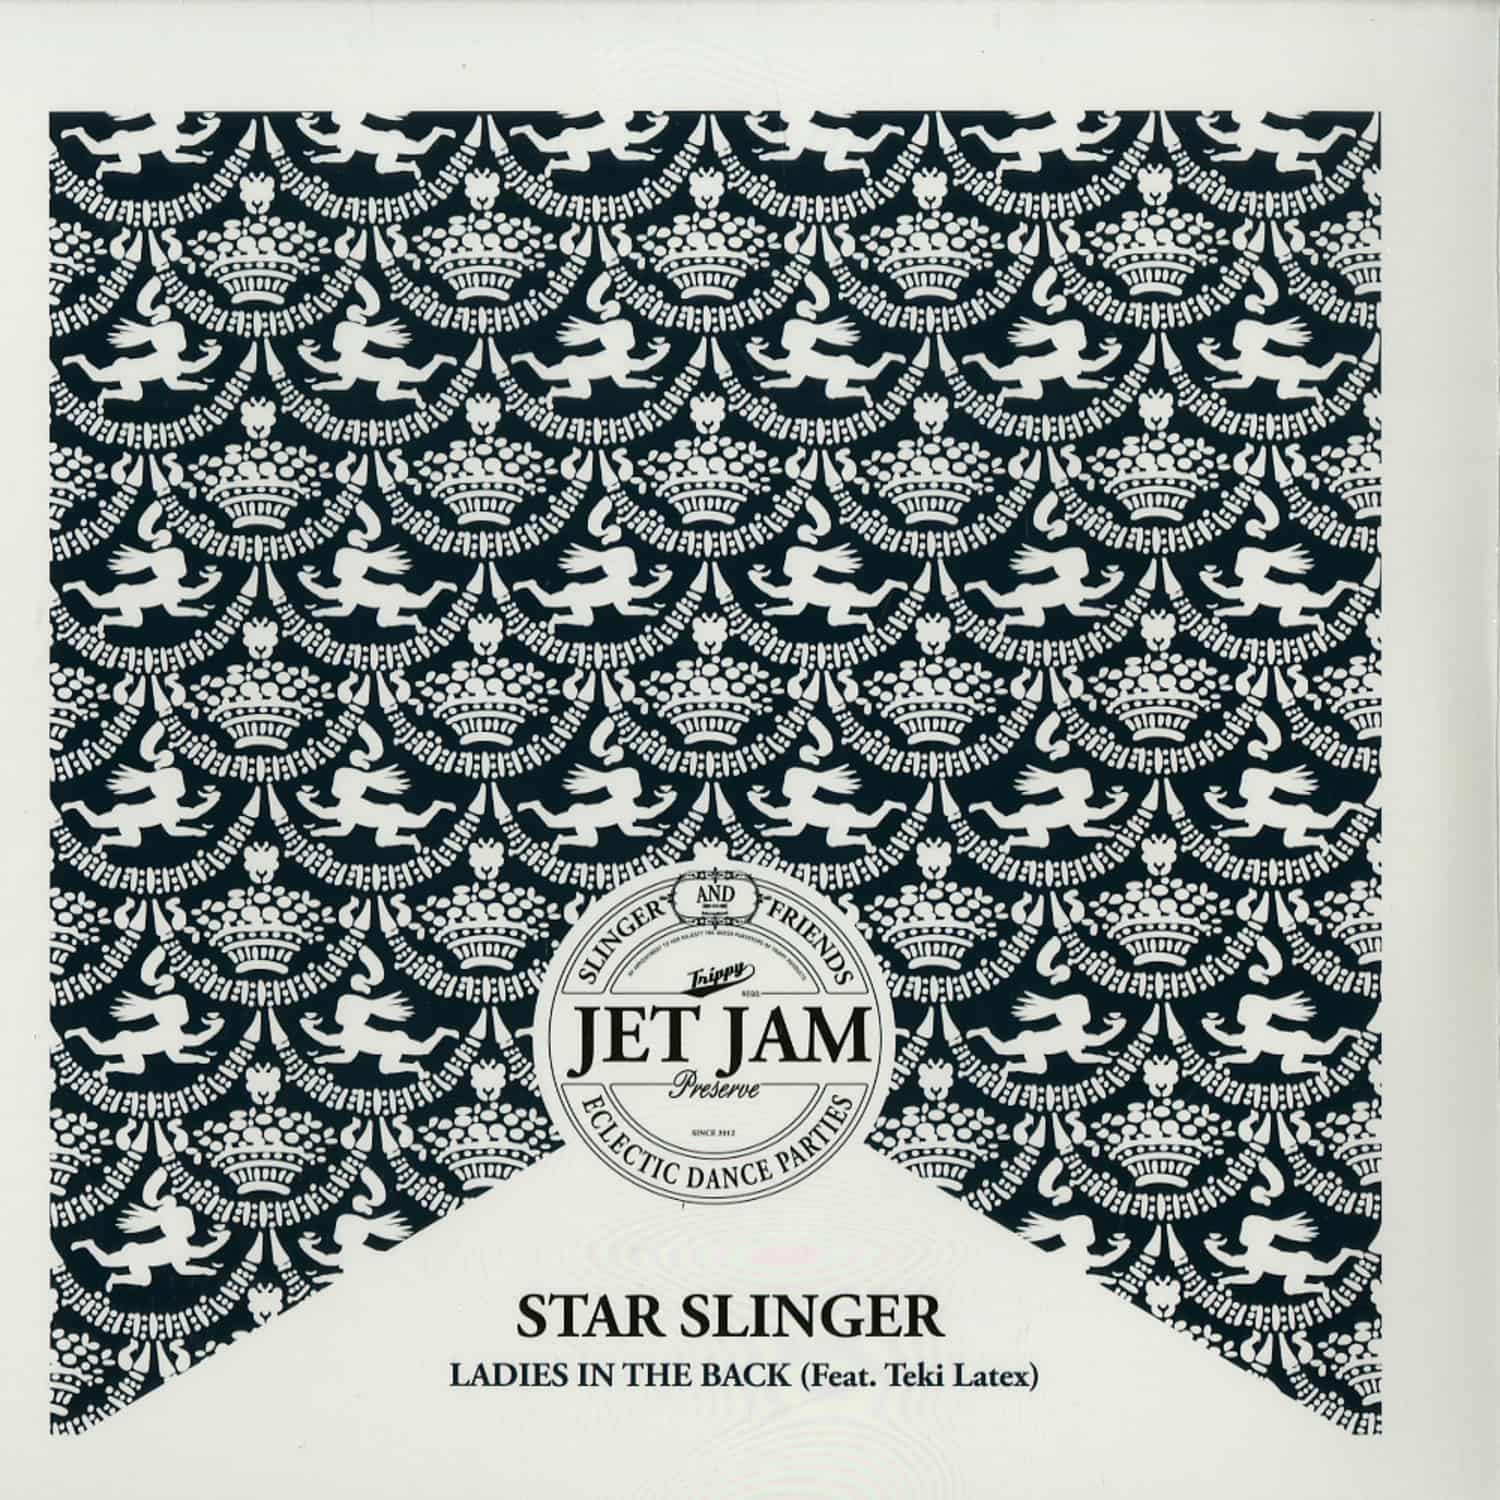 Star Slinger - LADIES IN THE BACK